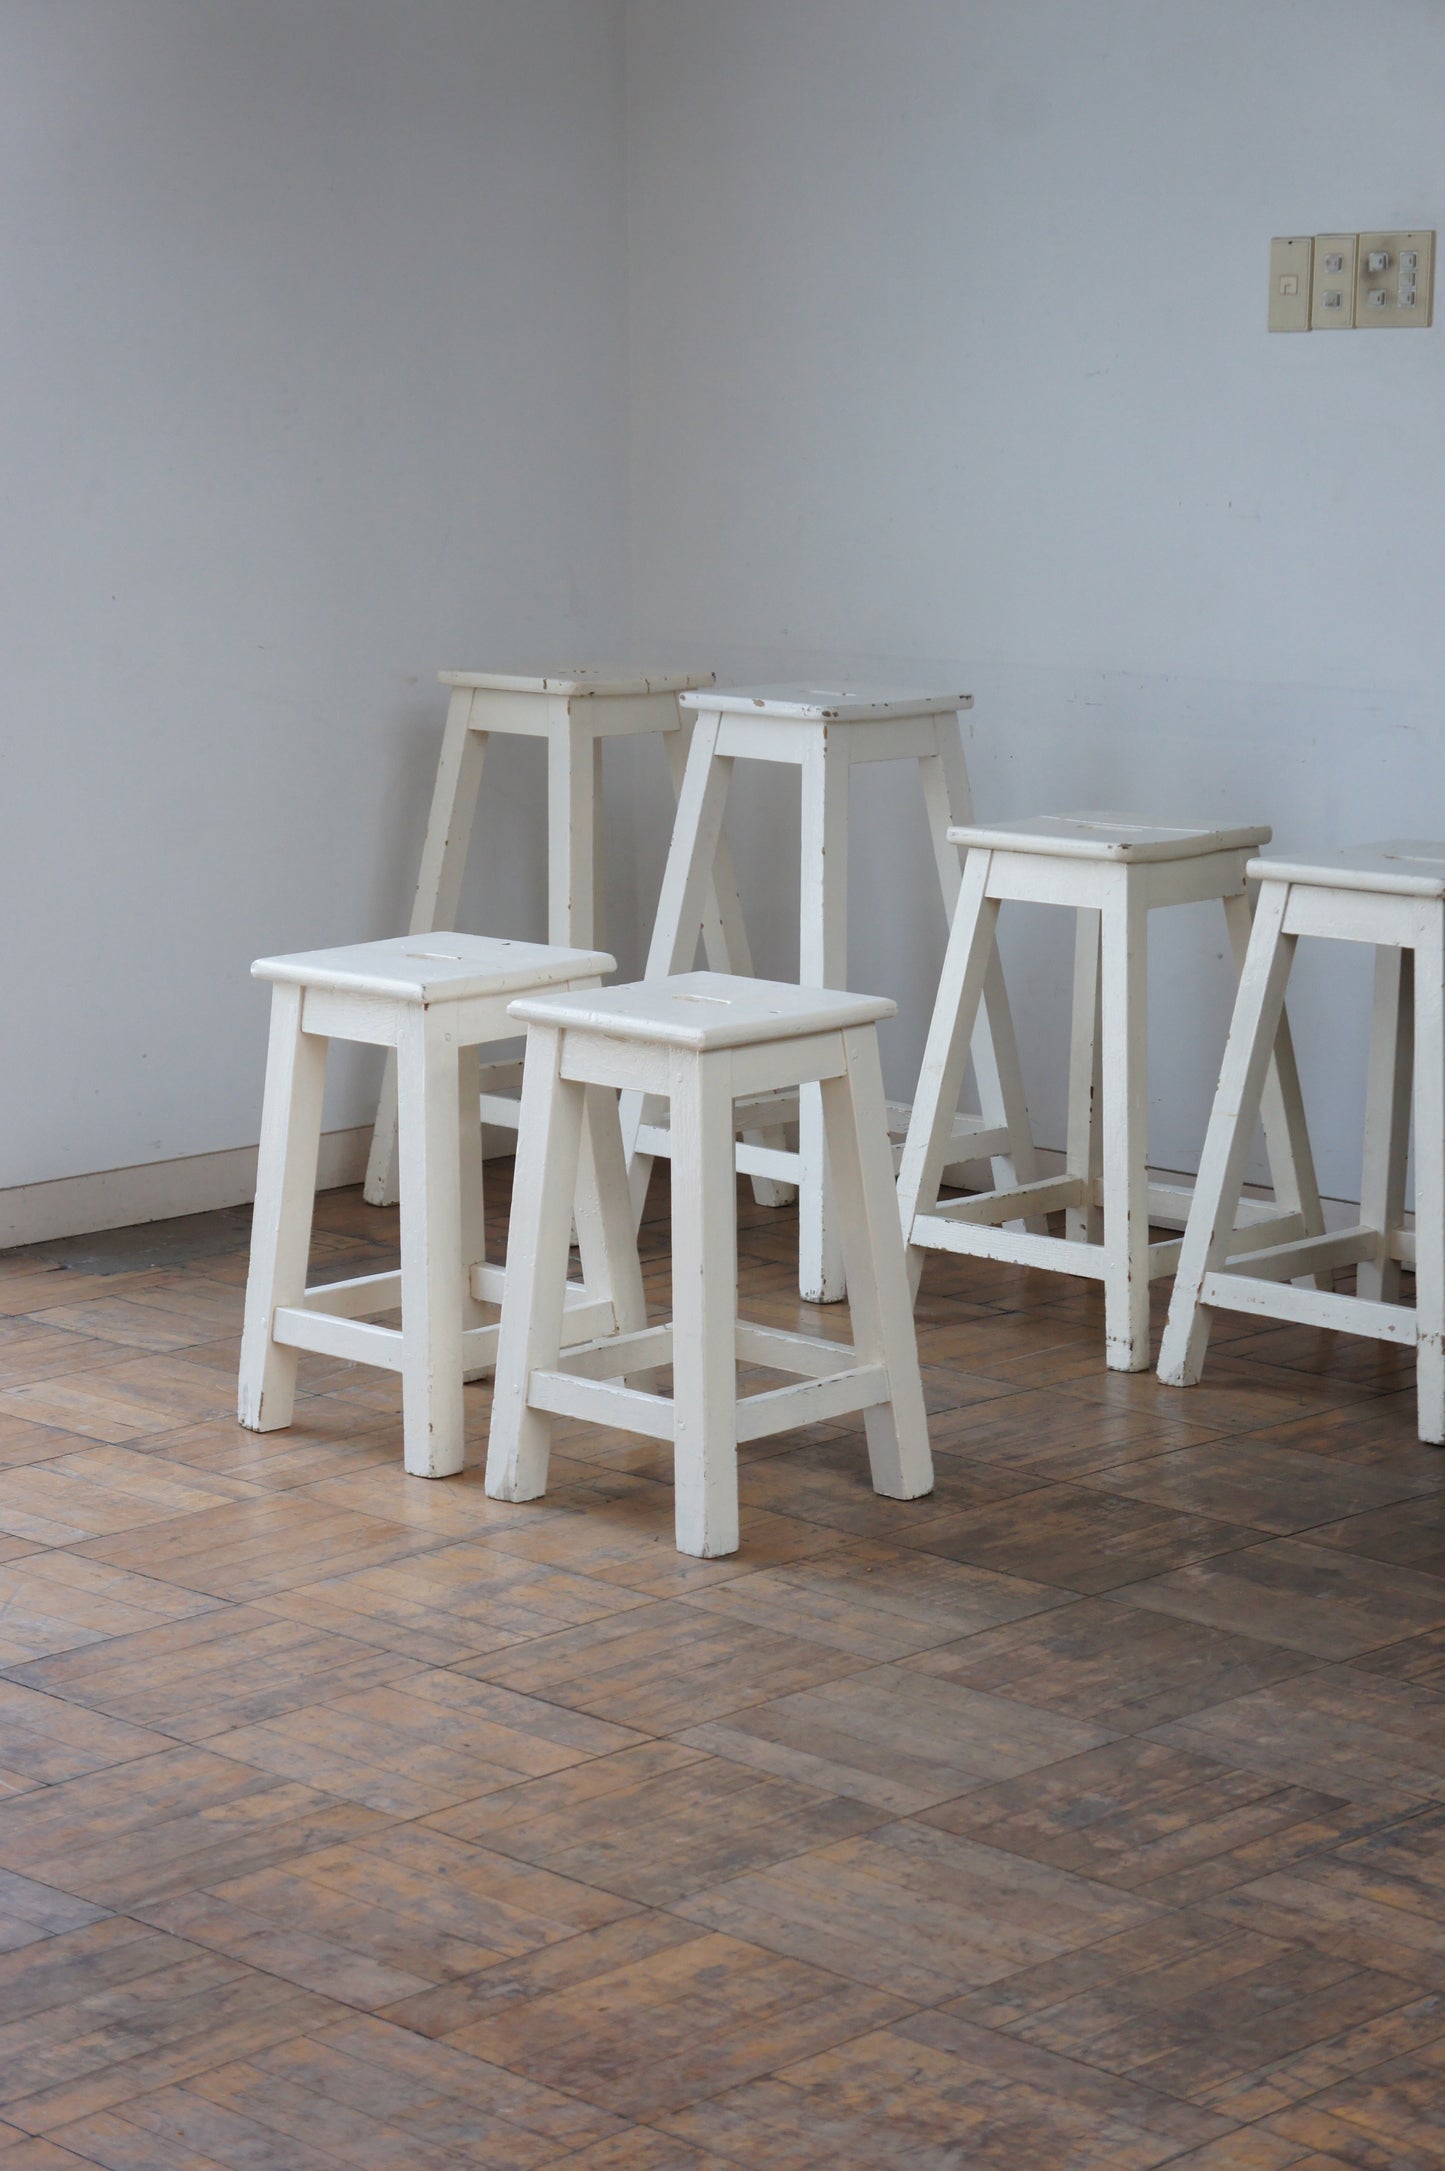 GOMENOL Wood stool H55